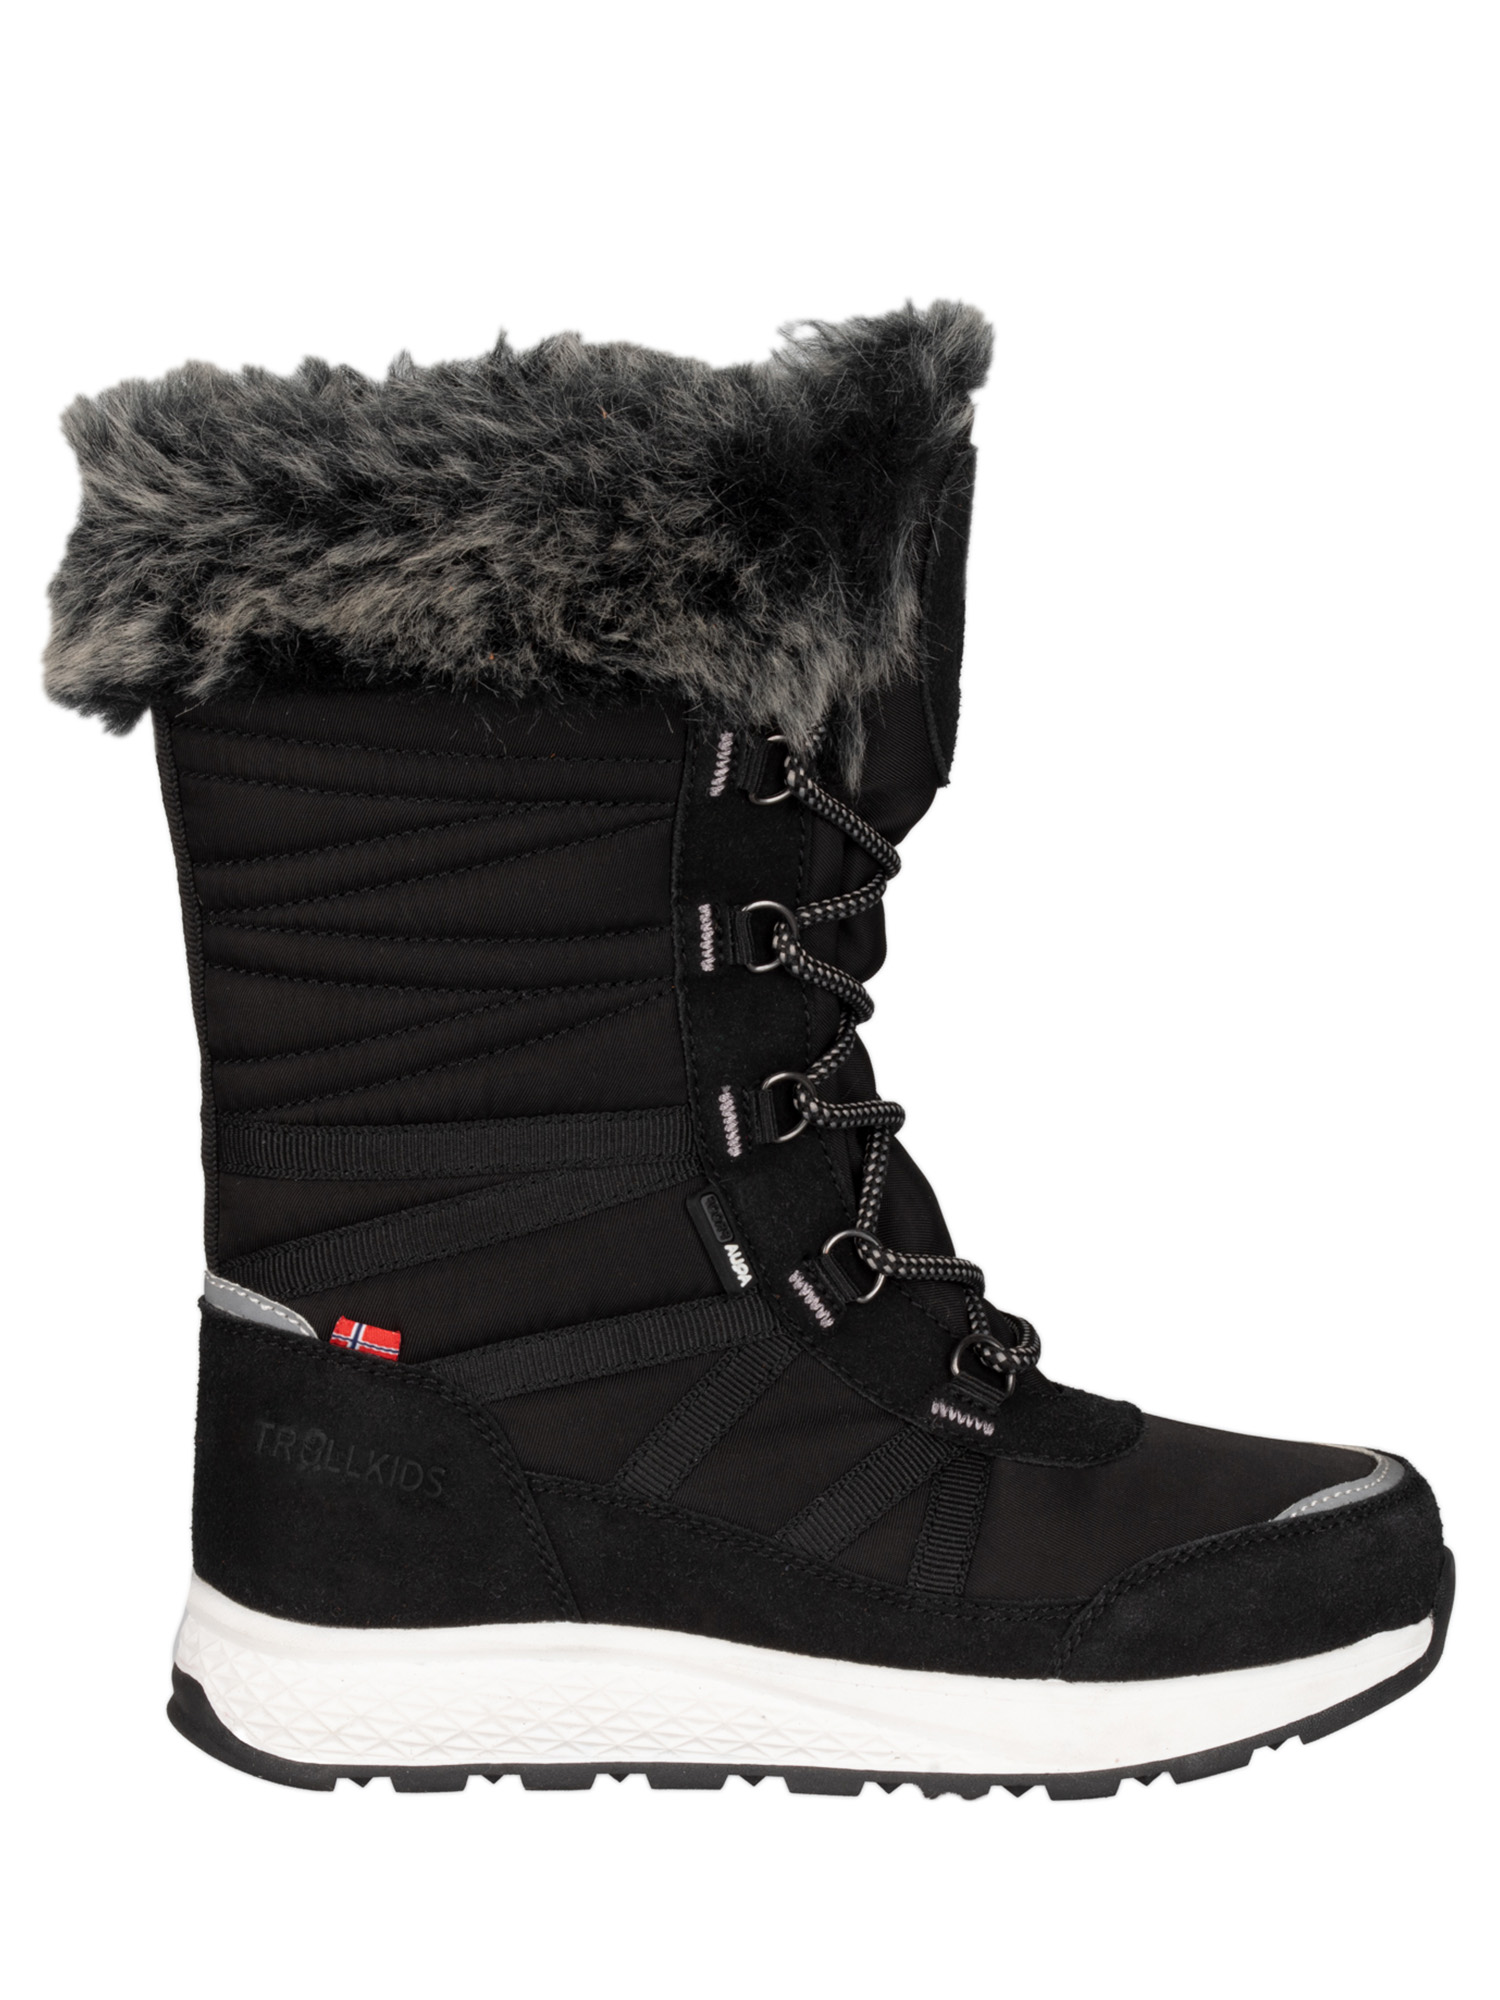 Ботинки Trollkids Girls Hemsedal Winter Boots Xt, черный, 29